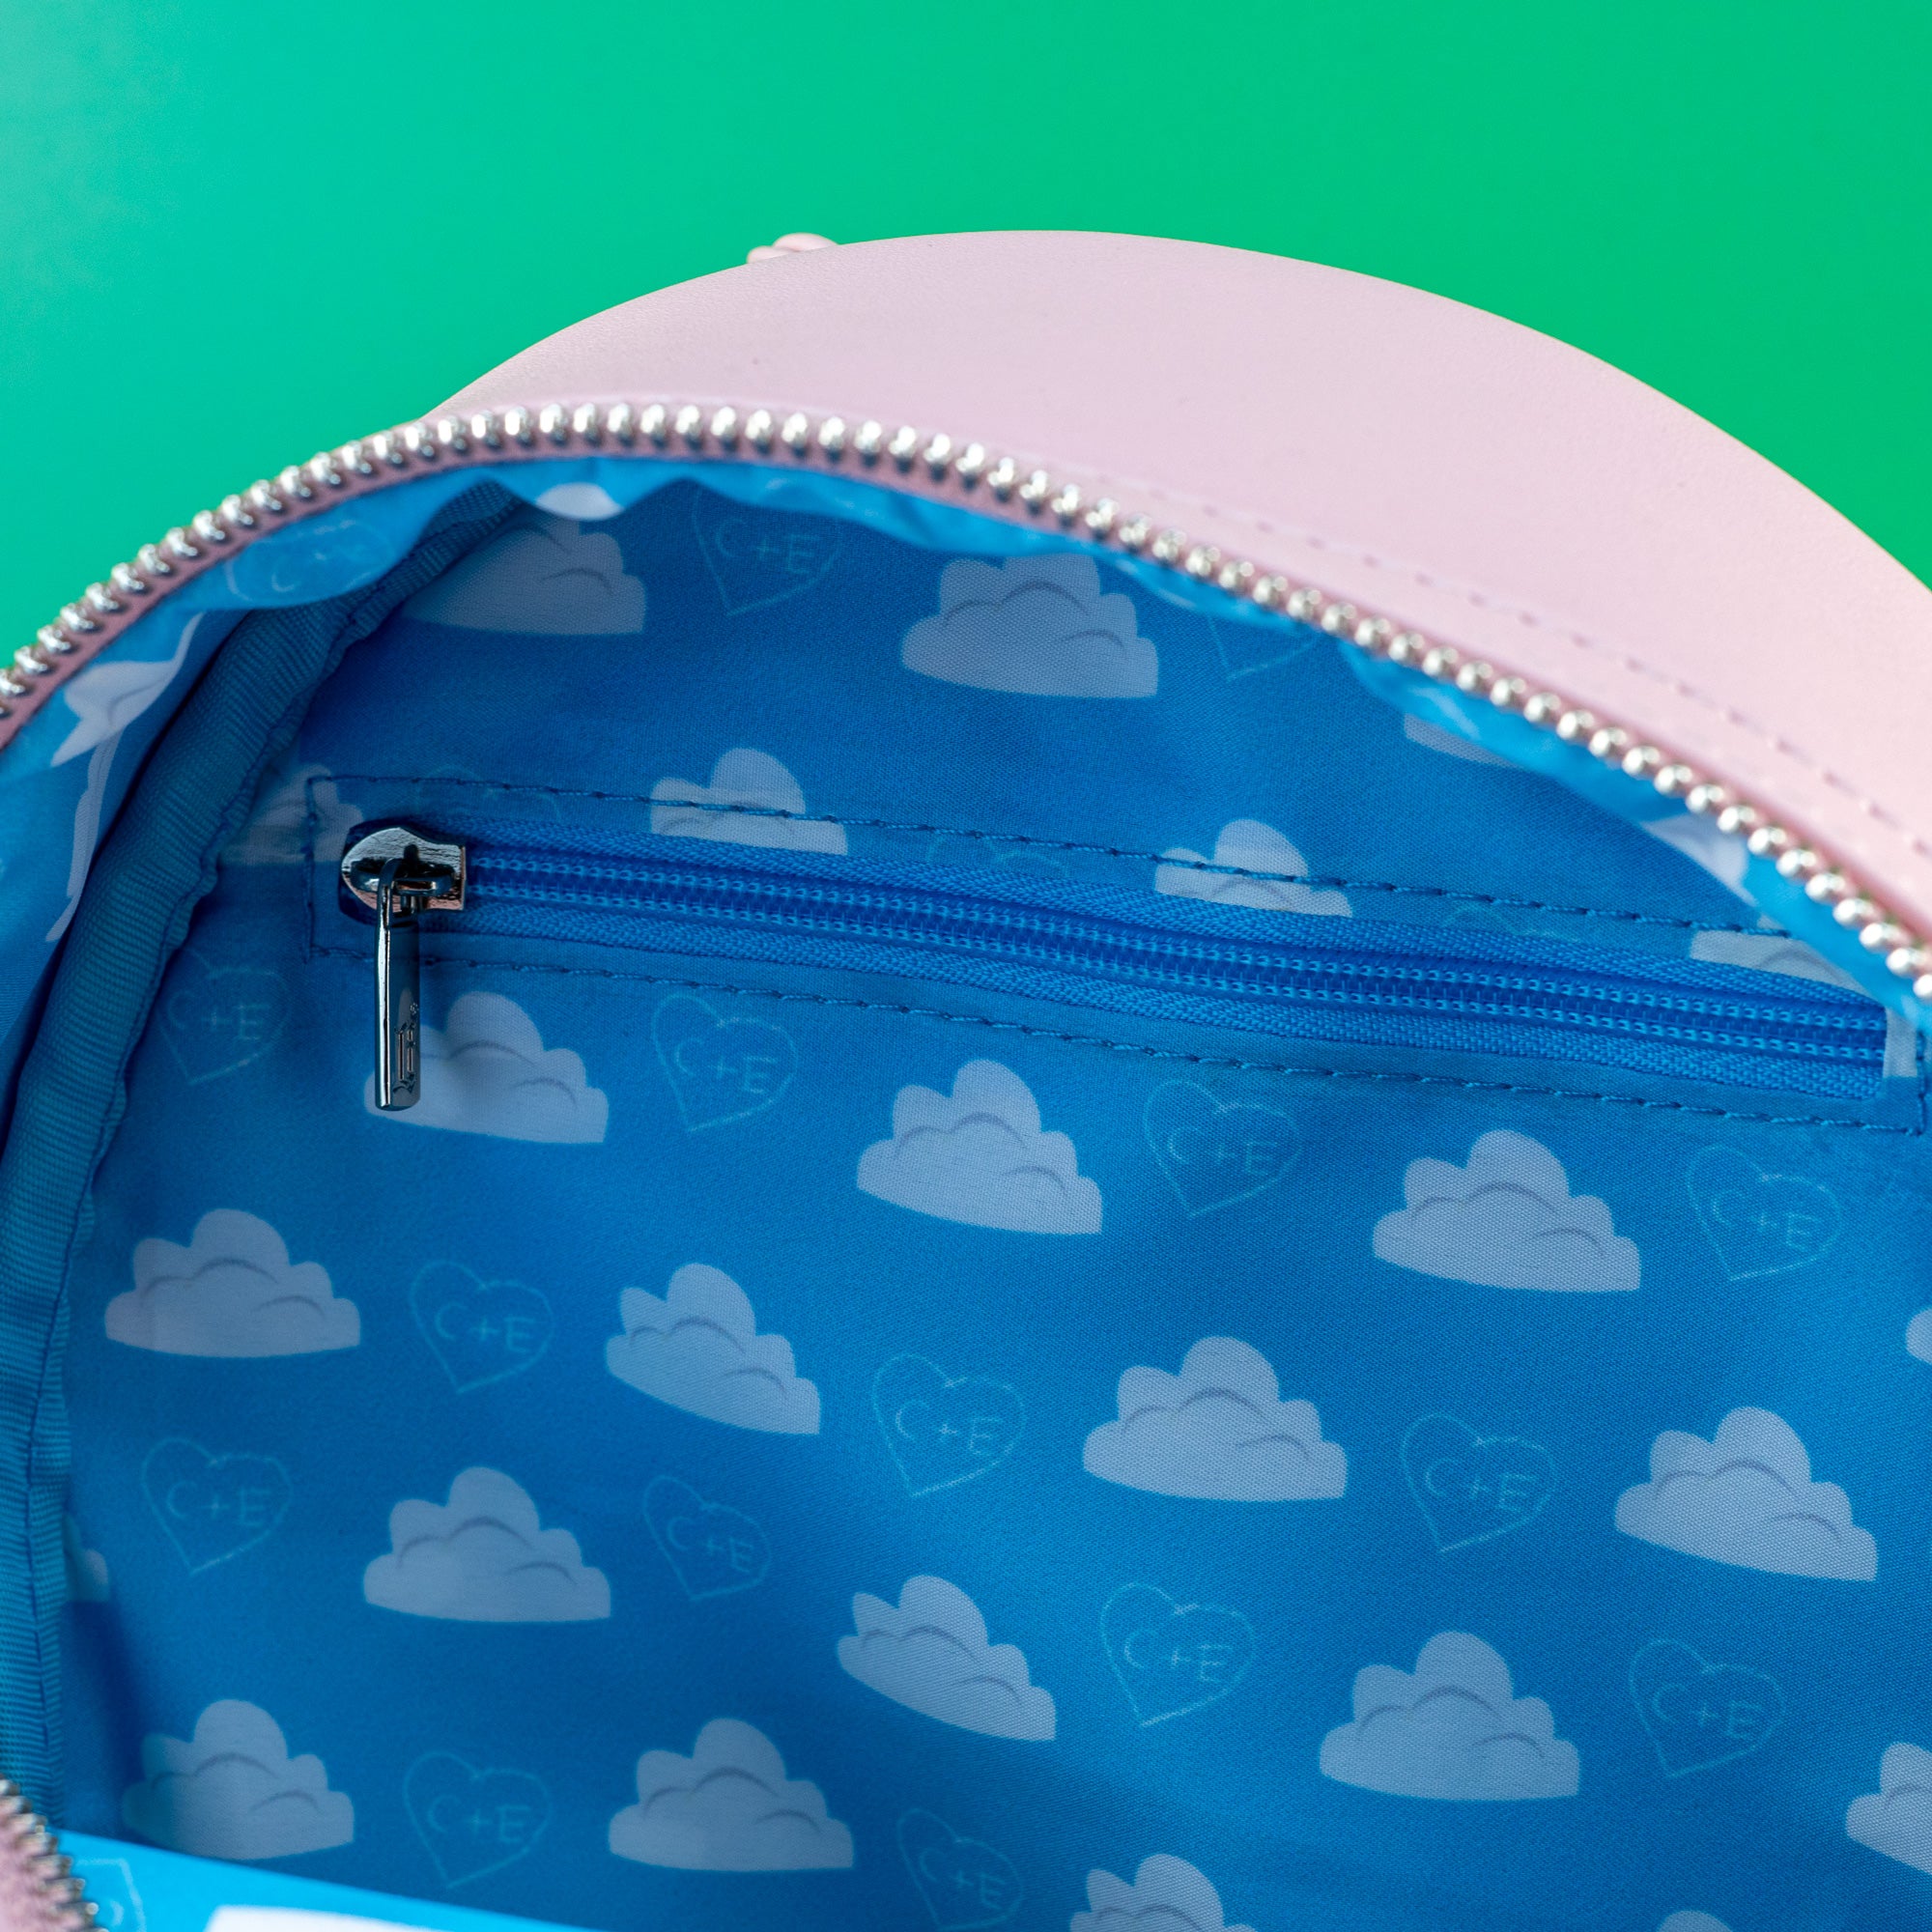 Loungefly x Disney Pixar Up Carl and Ellie Mini Backpack